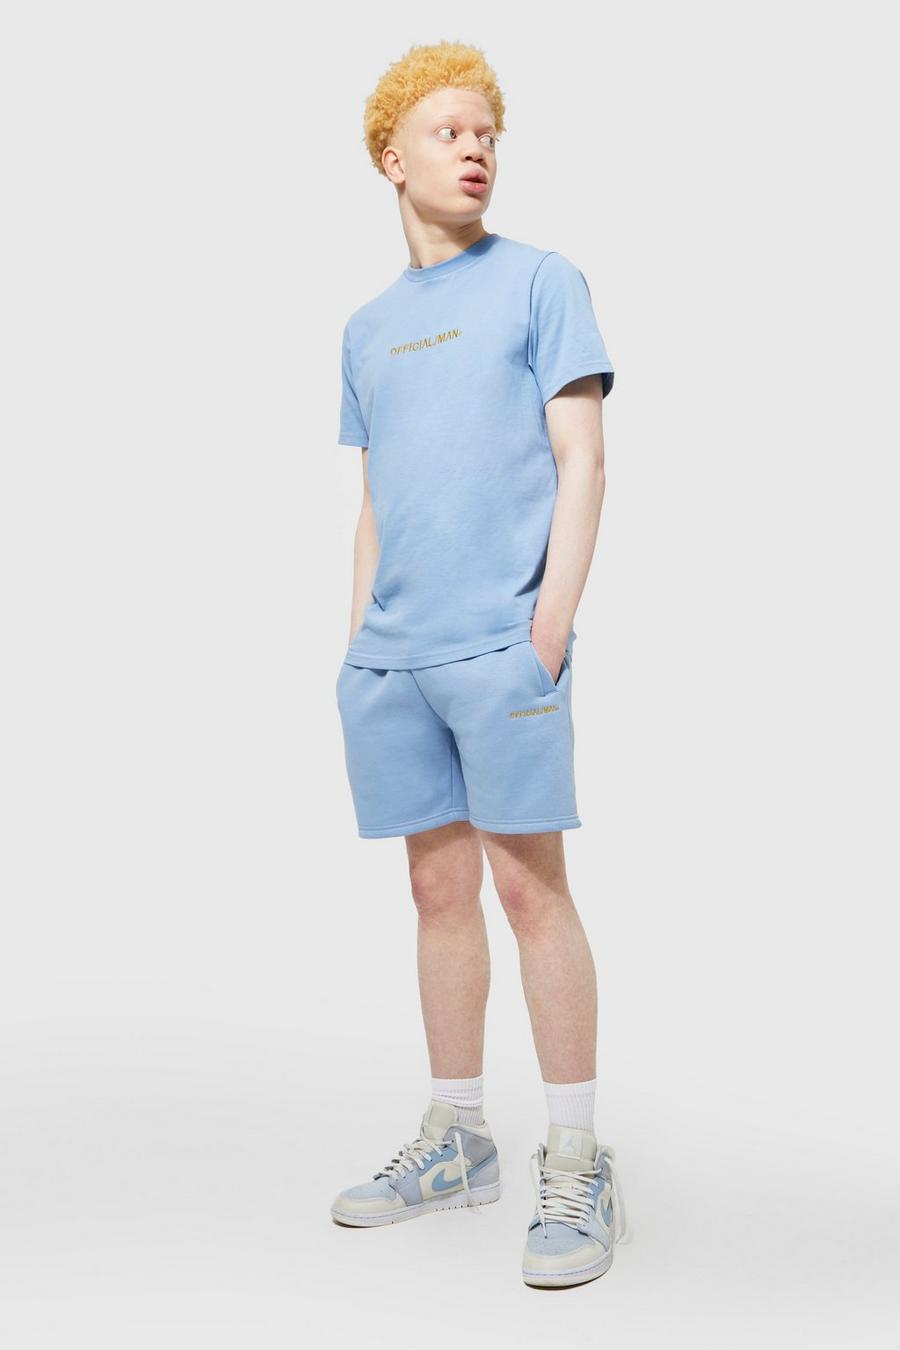 Slim-Fit Official Man T-Shirt und Shorts, Light blue blau